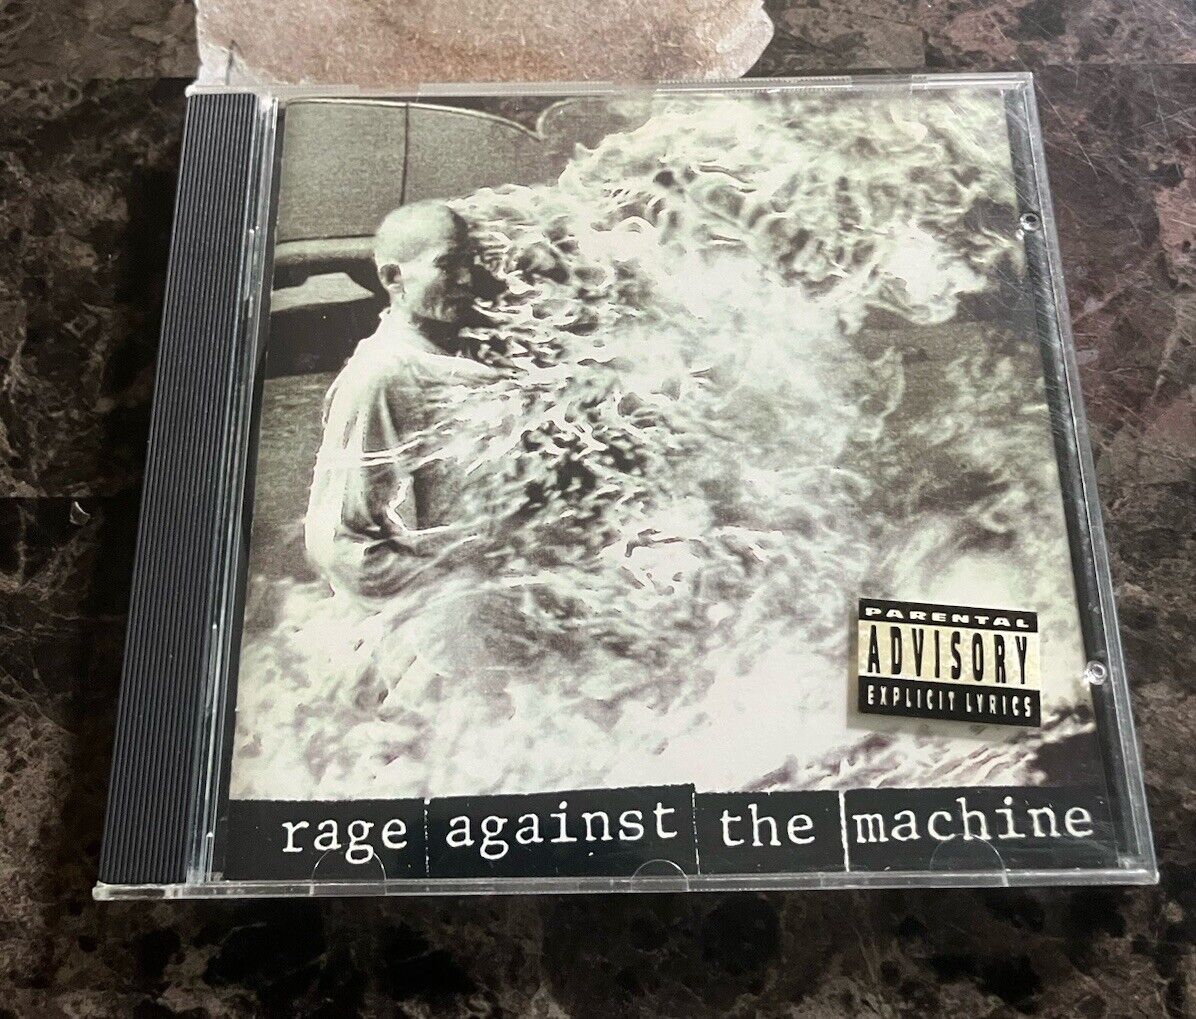 Rage Against The Machine / self-titled - Explicit Lyrics - Rock - Music Audio cd